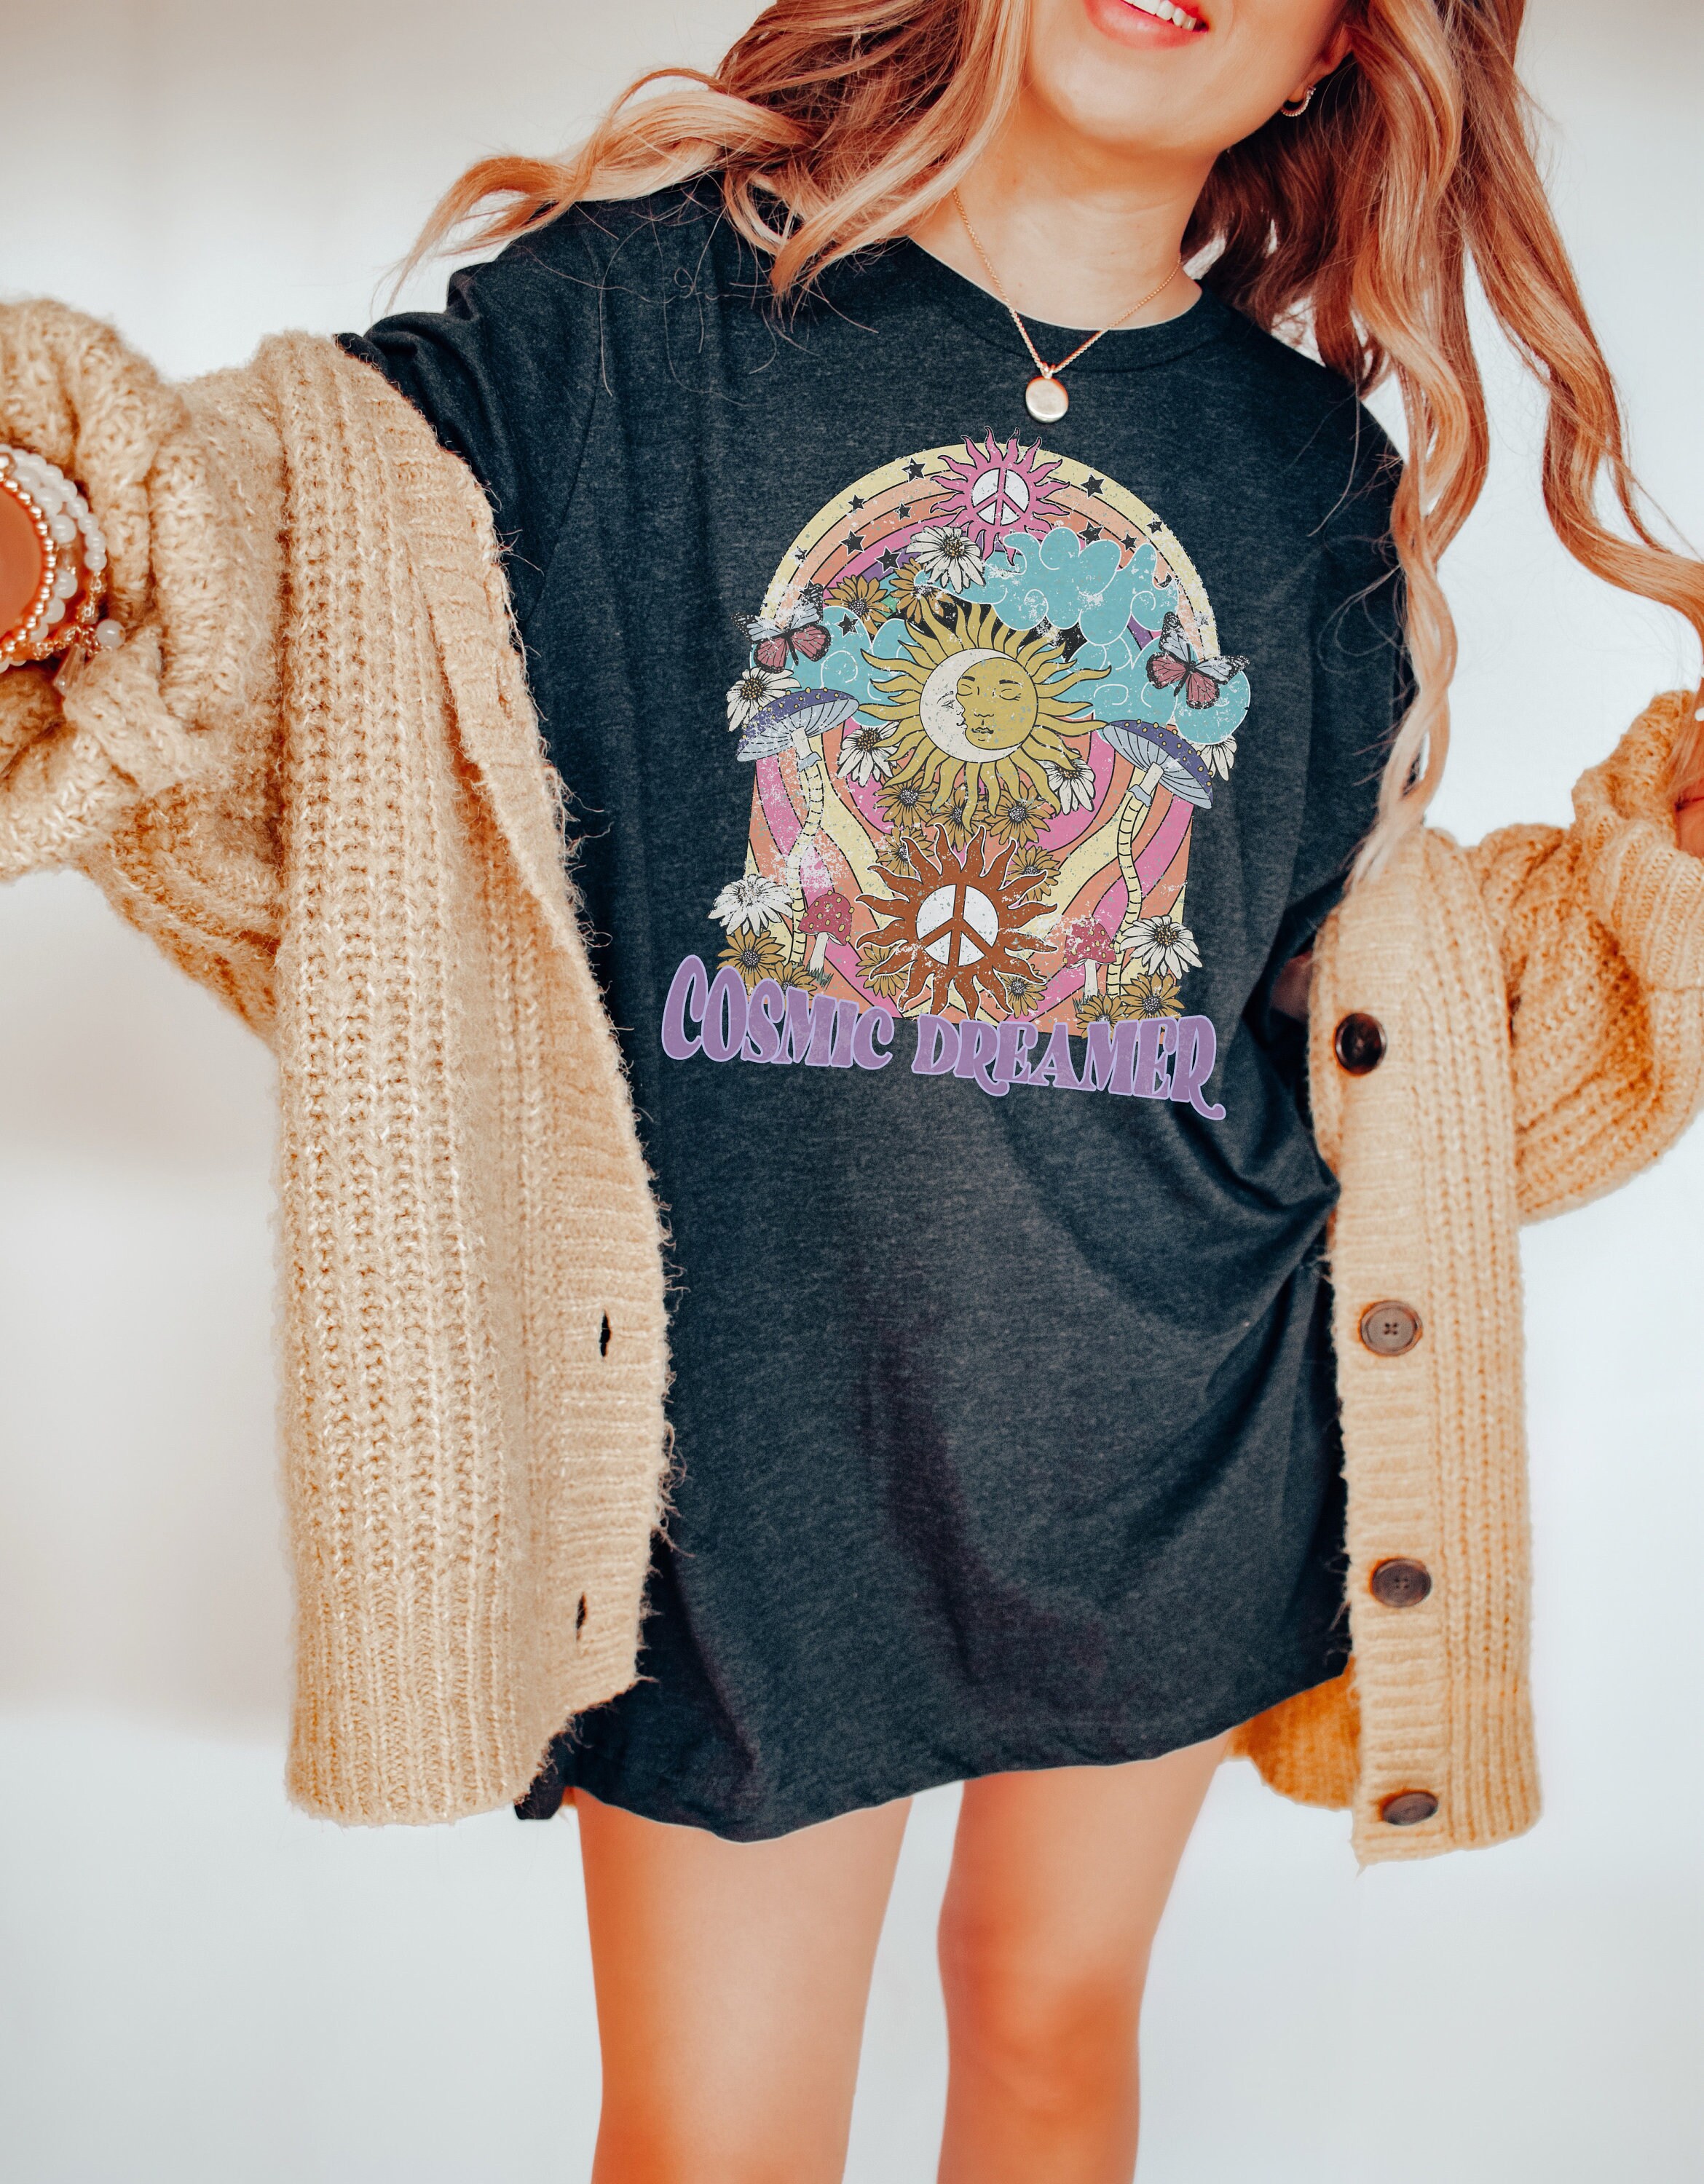 Cosmic Dreamer Mushroom Shirt Alt Clothing Butterfly Shirt - Etsy